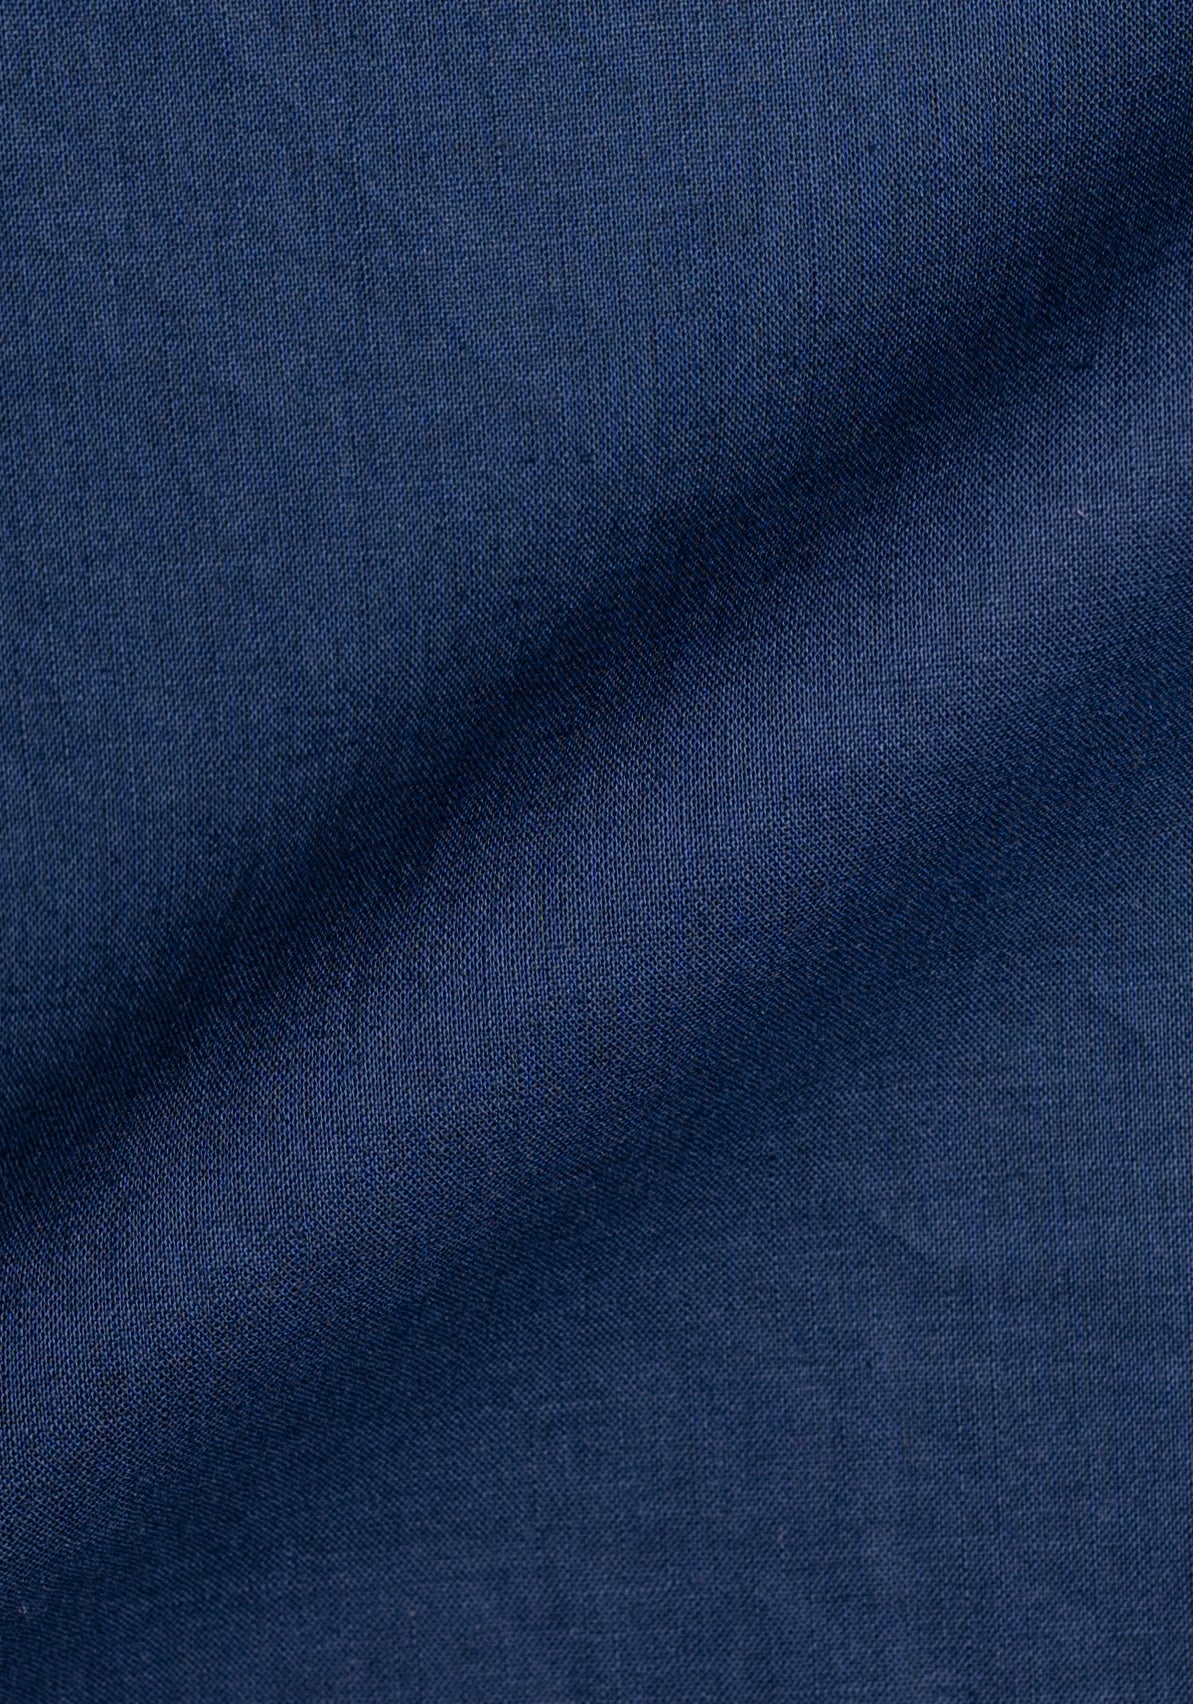 Navy Cotton Linen